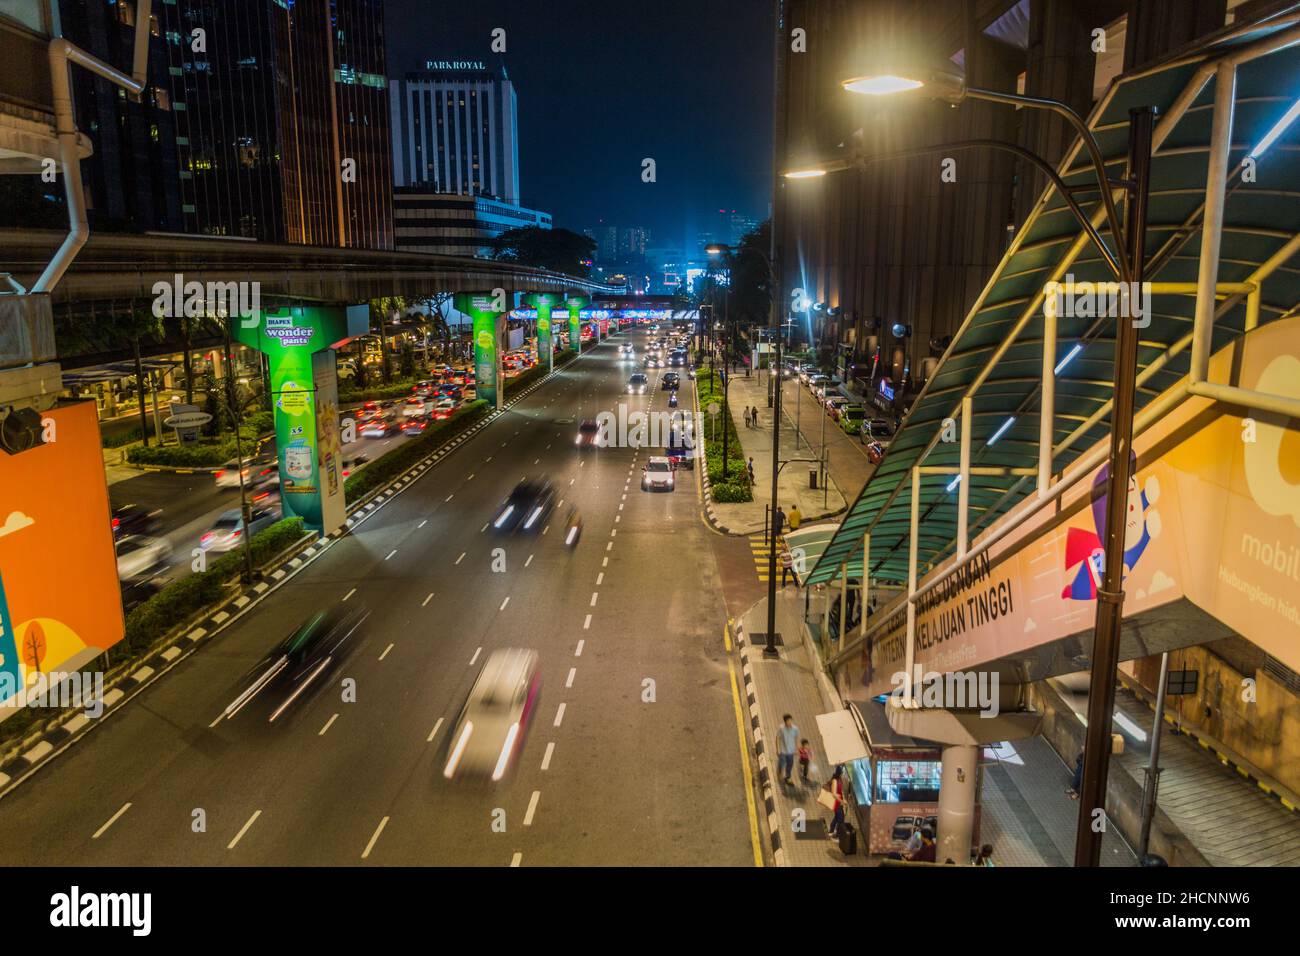 KUALA LUMPUR, MALESIA - 23 MARZO 2018: Vista notturna di Jalan Imbi Street a Kuala Lumpur, Malesia Foto Stock